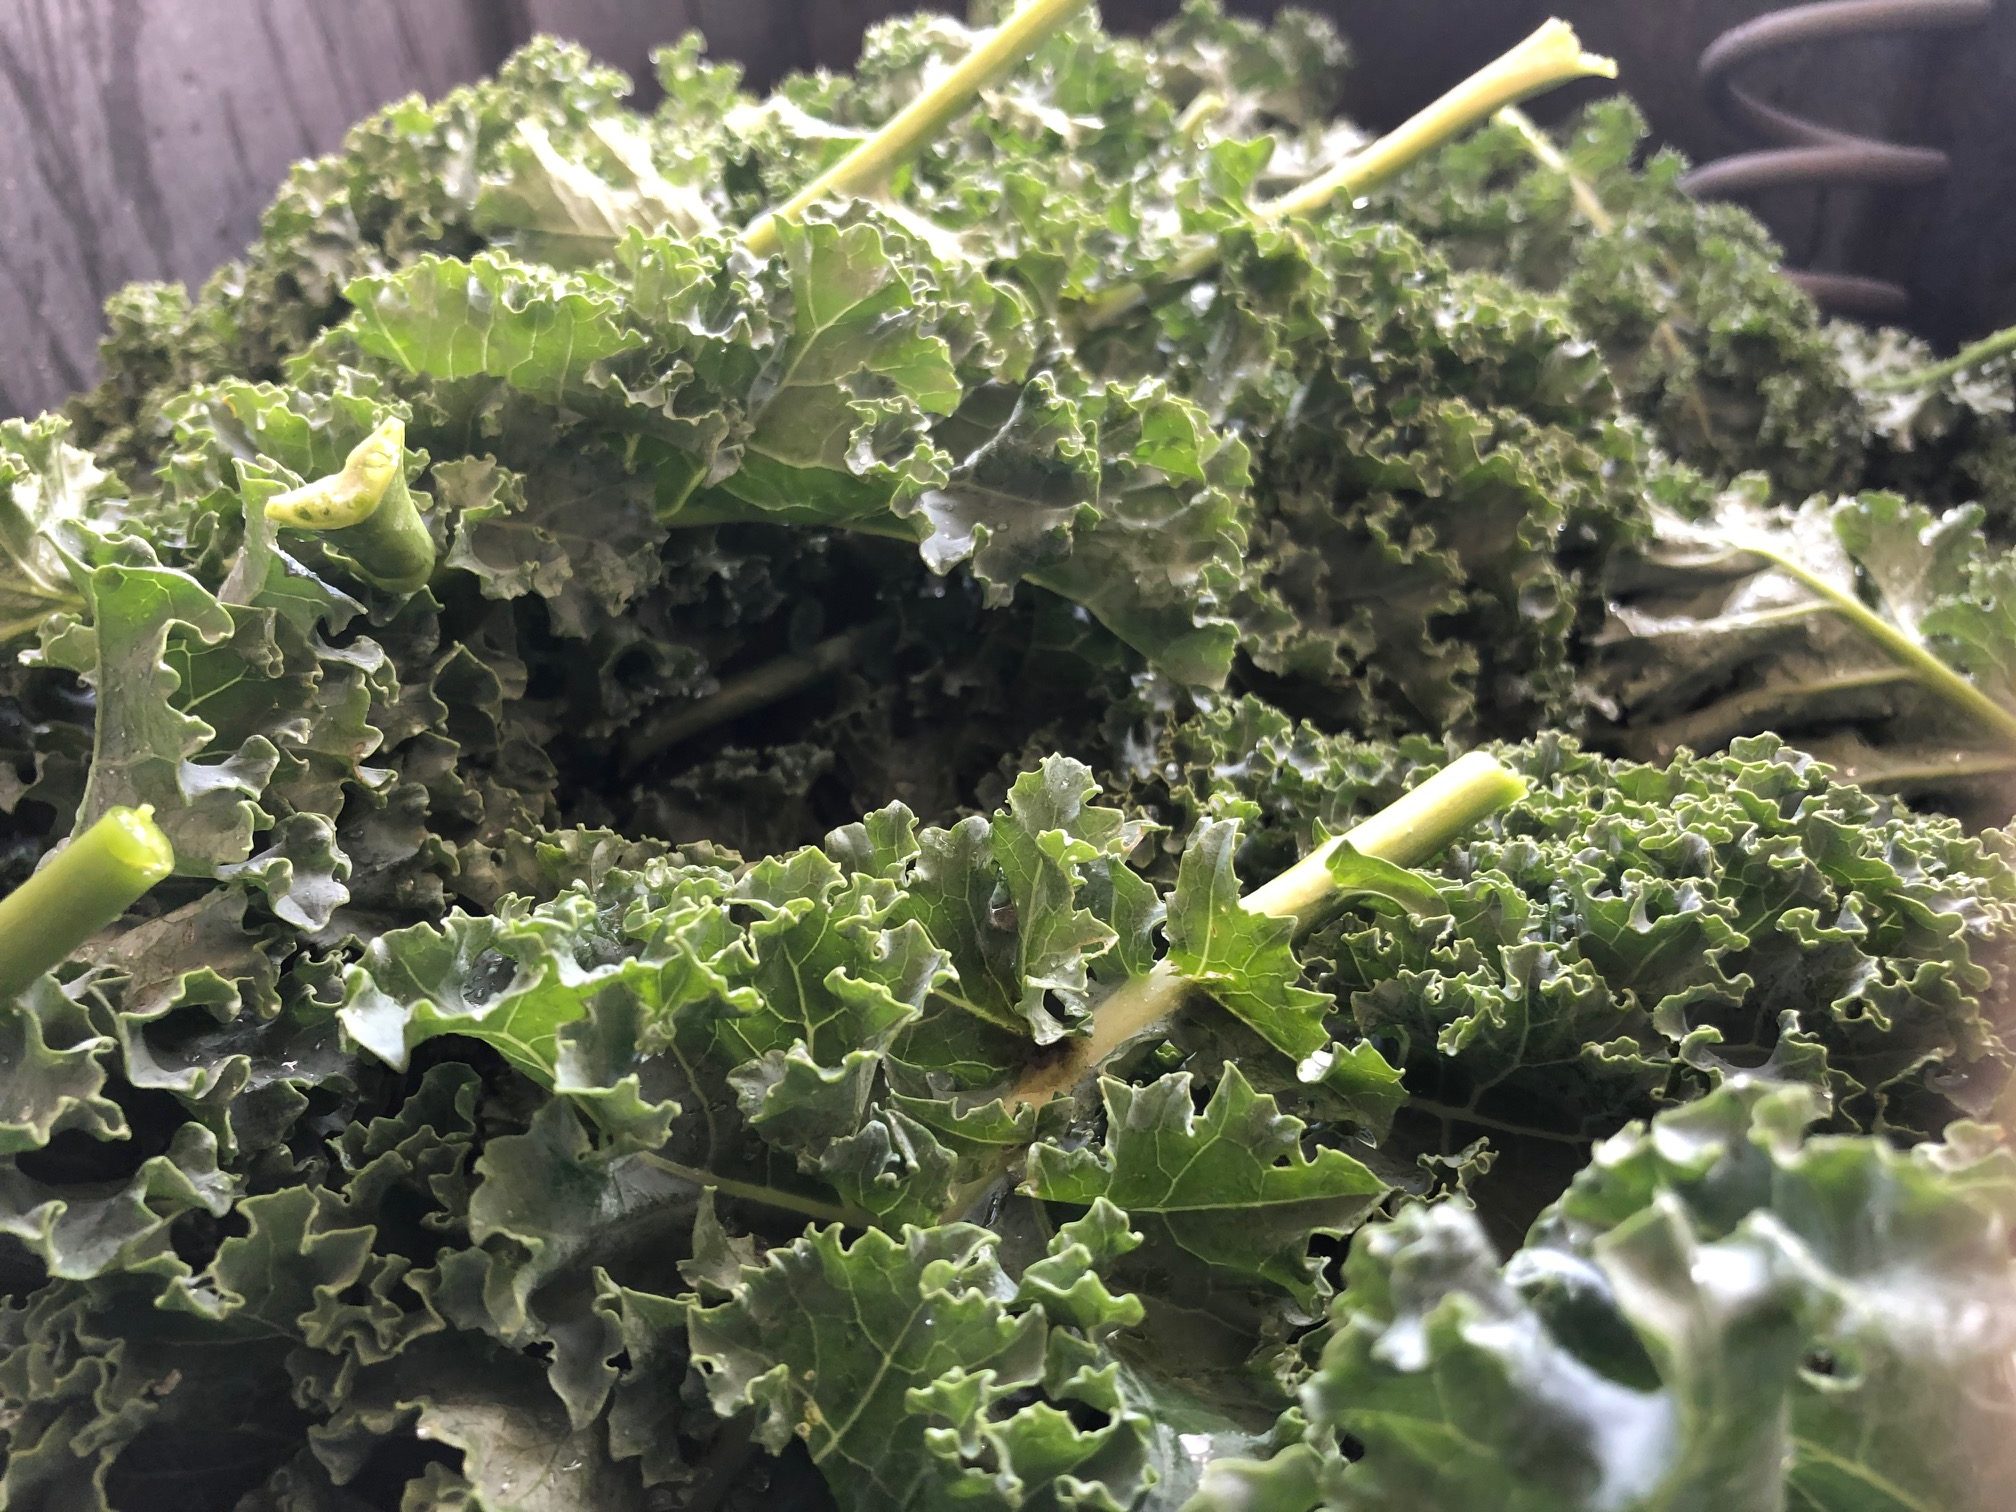 Starbor Kale